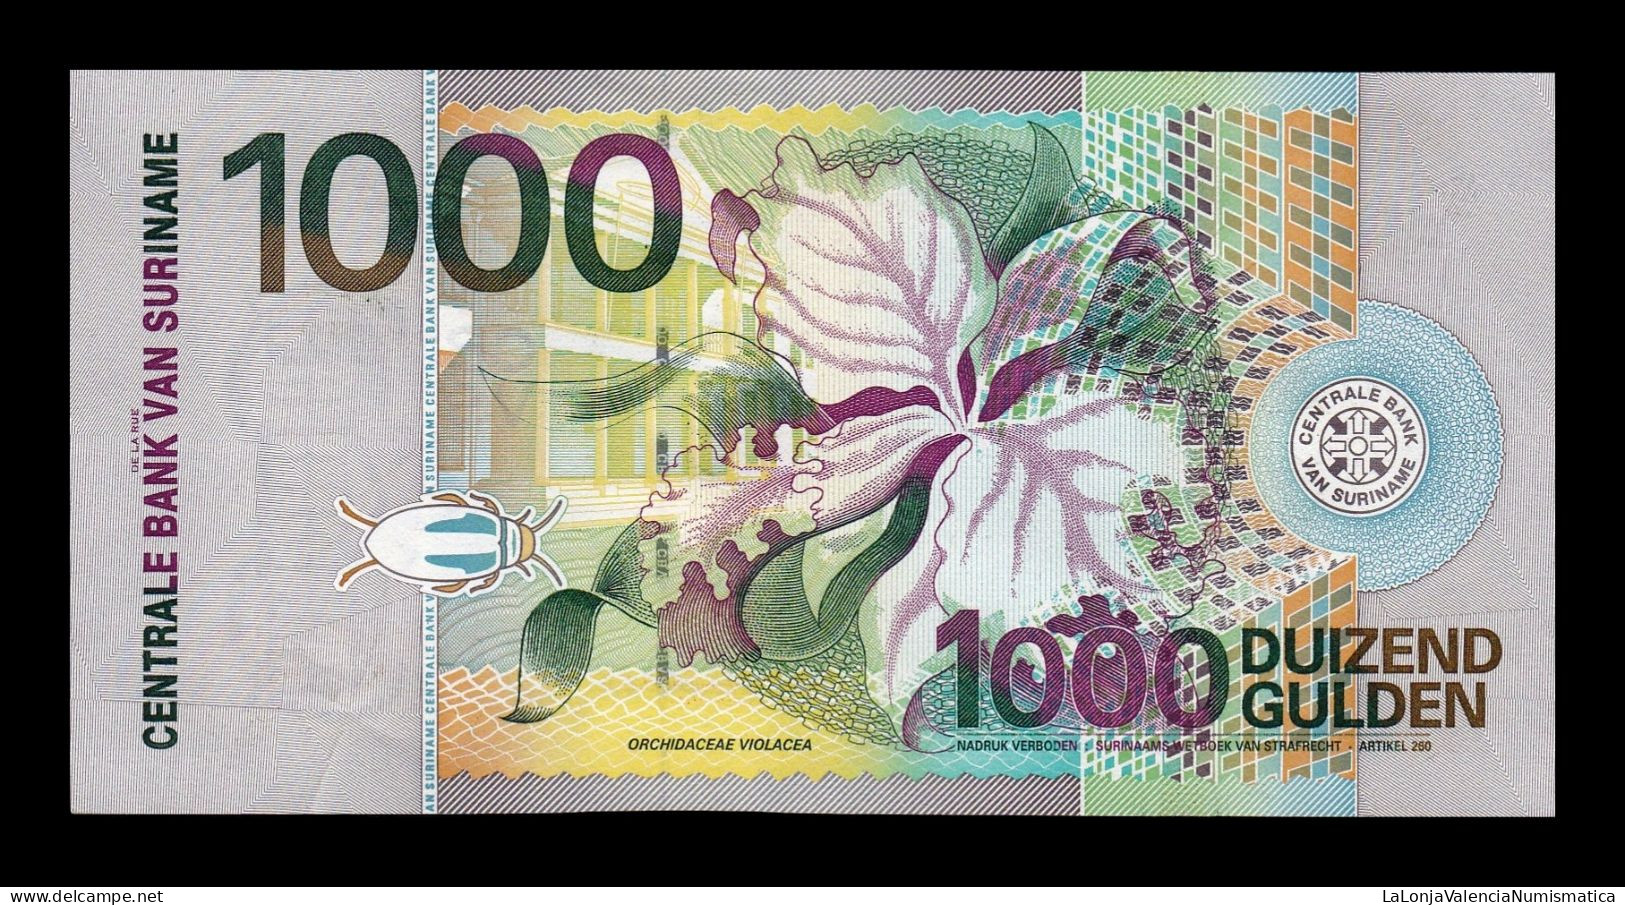 Surinam Suriname 1000 Gulden 2000 Pick 151 Sc Unc - Surinam